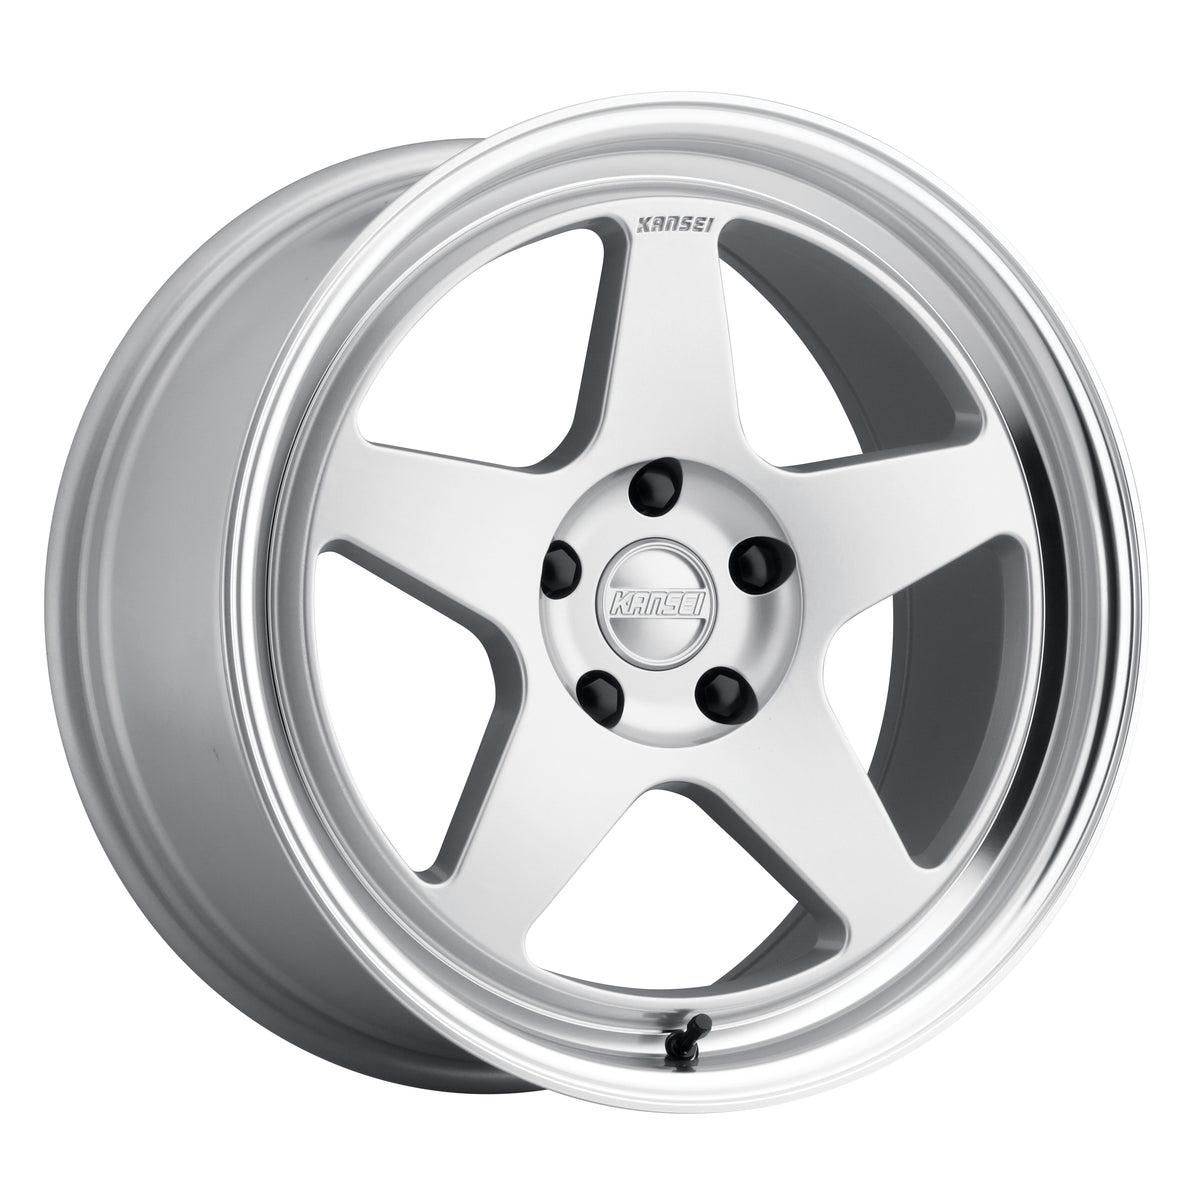 K12H KNP Wheel, Size: 18" x 9", Bolt Pattern: 5 x 100 mm, Backspace: 6.38" [Finish: Hyper Silver]